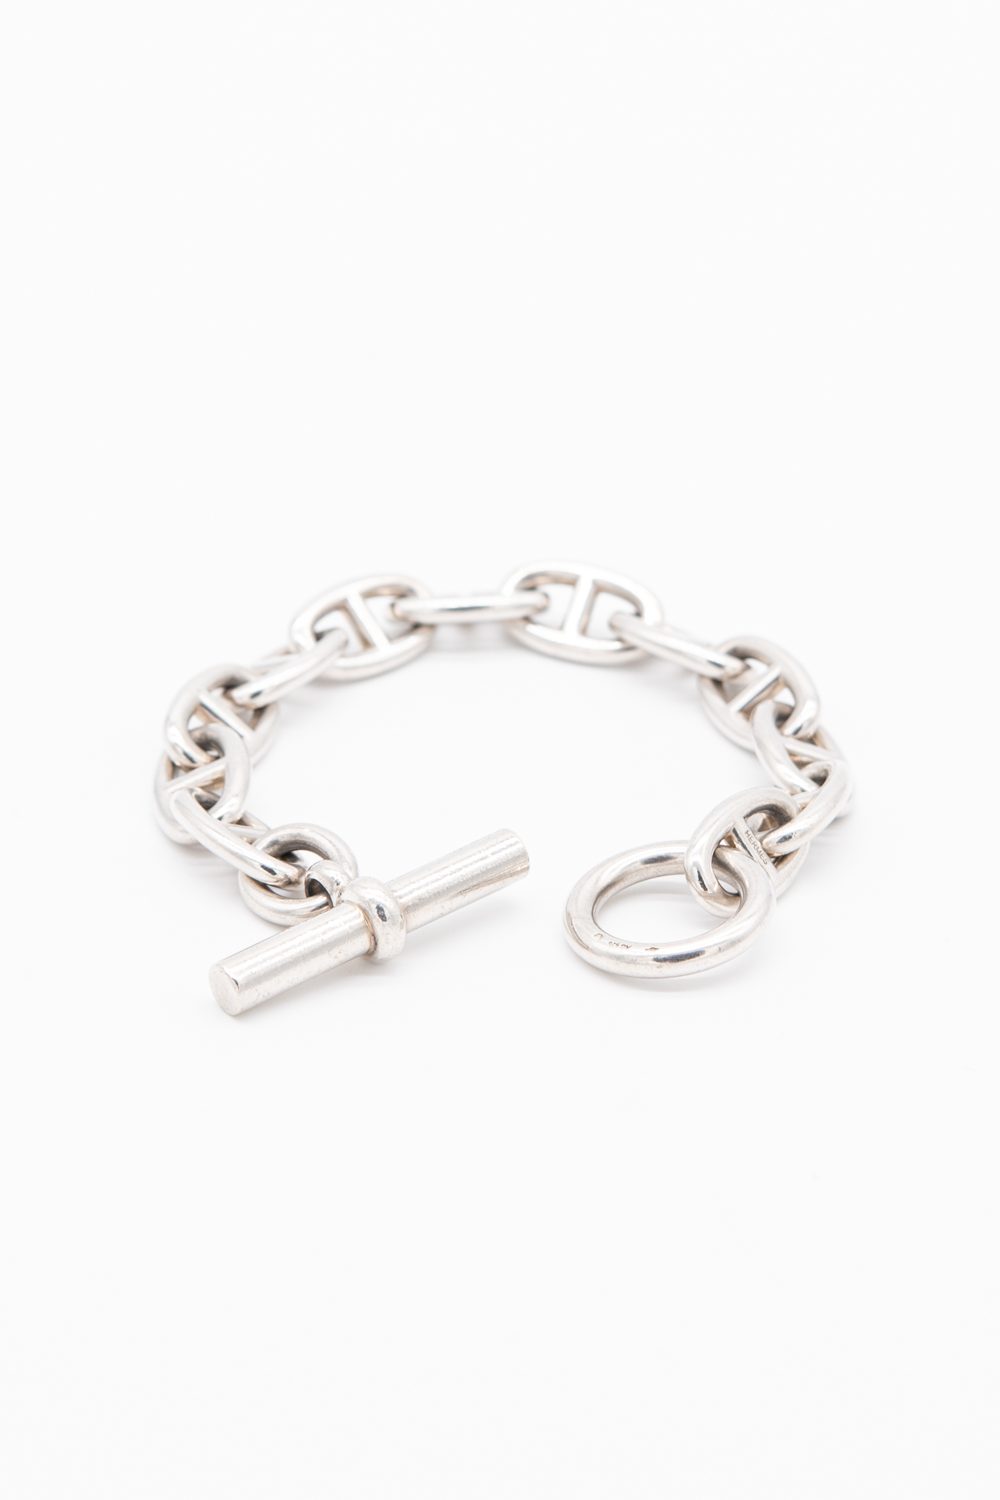 Hermès "Chaîne d'ancre" Armband in Silber